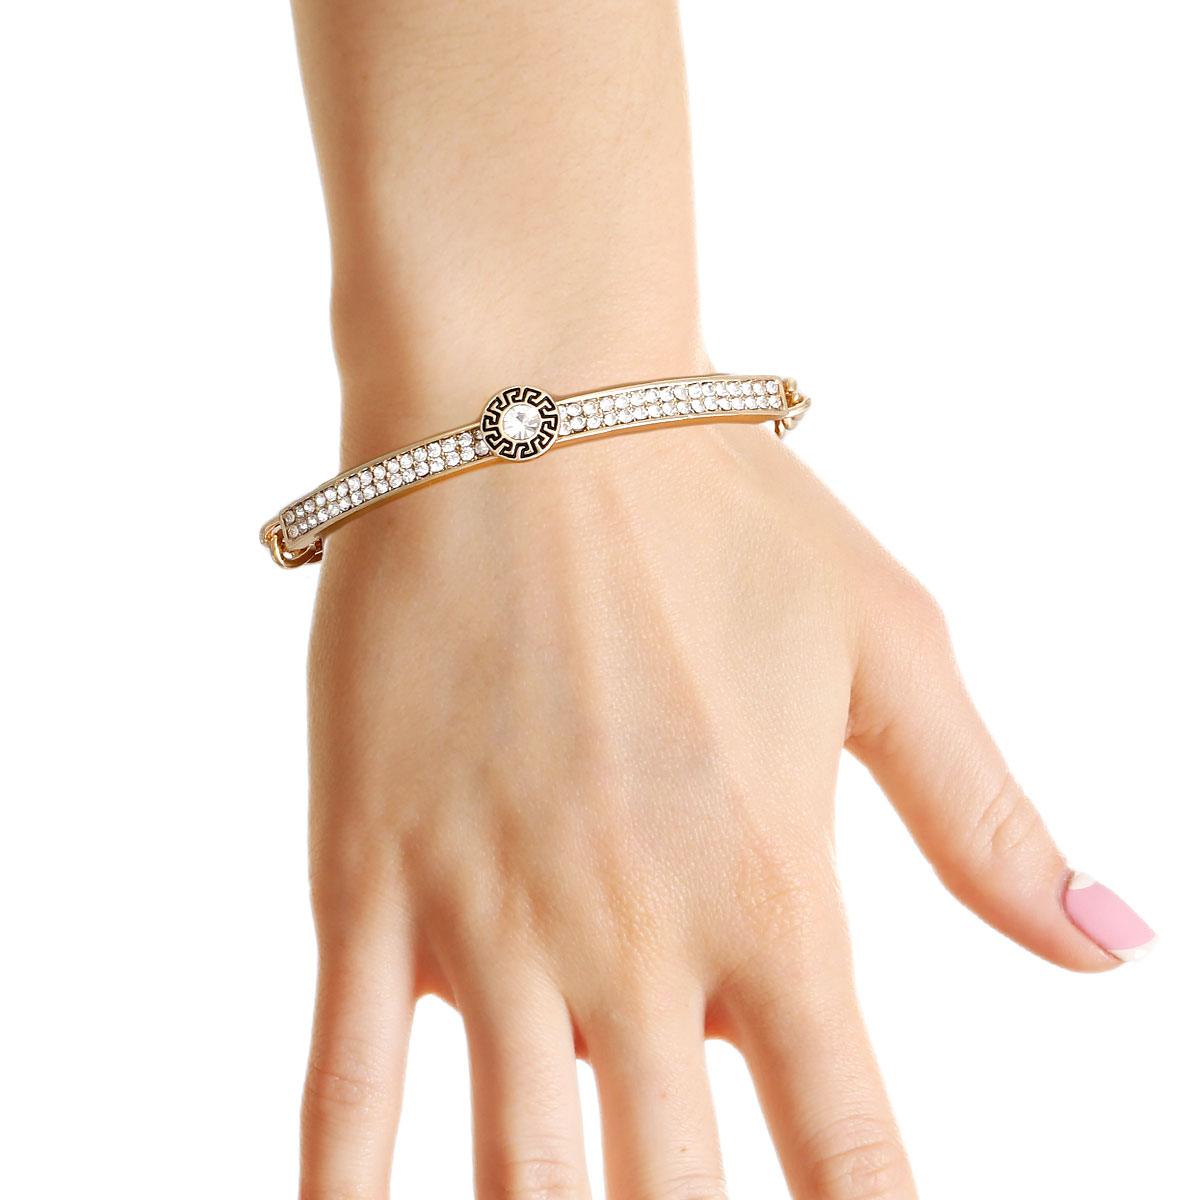 Black heart stone stylish bracelet – Alluring Accessories